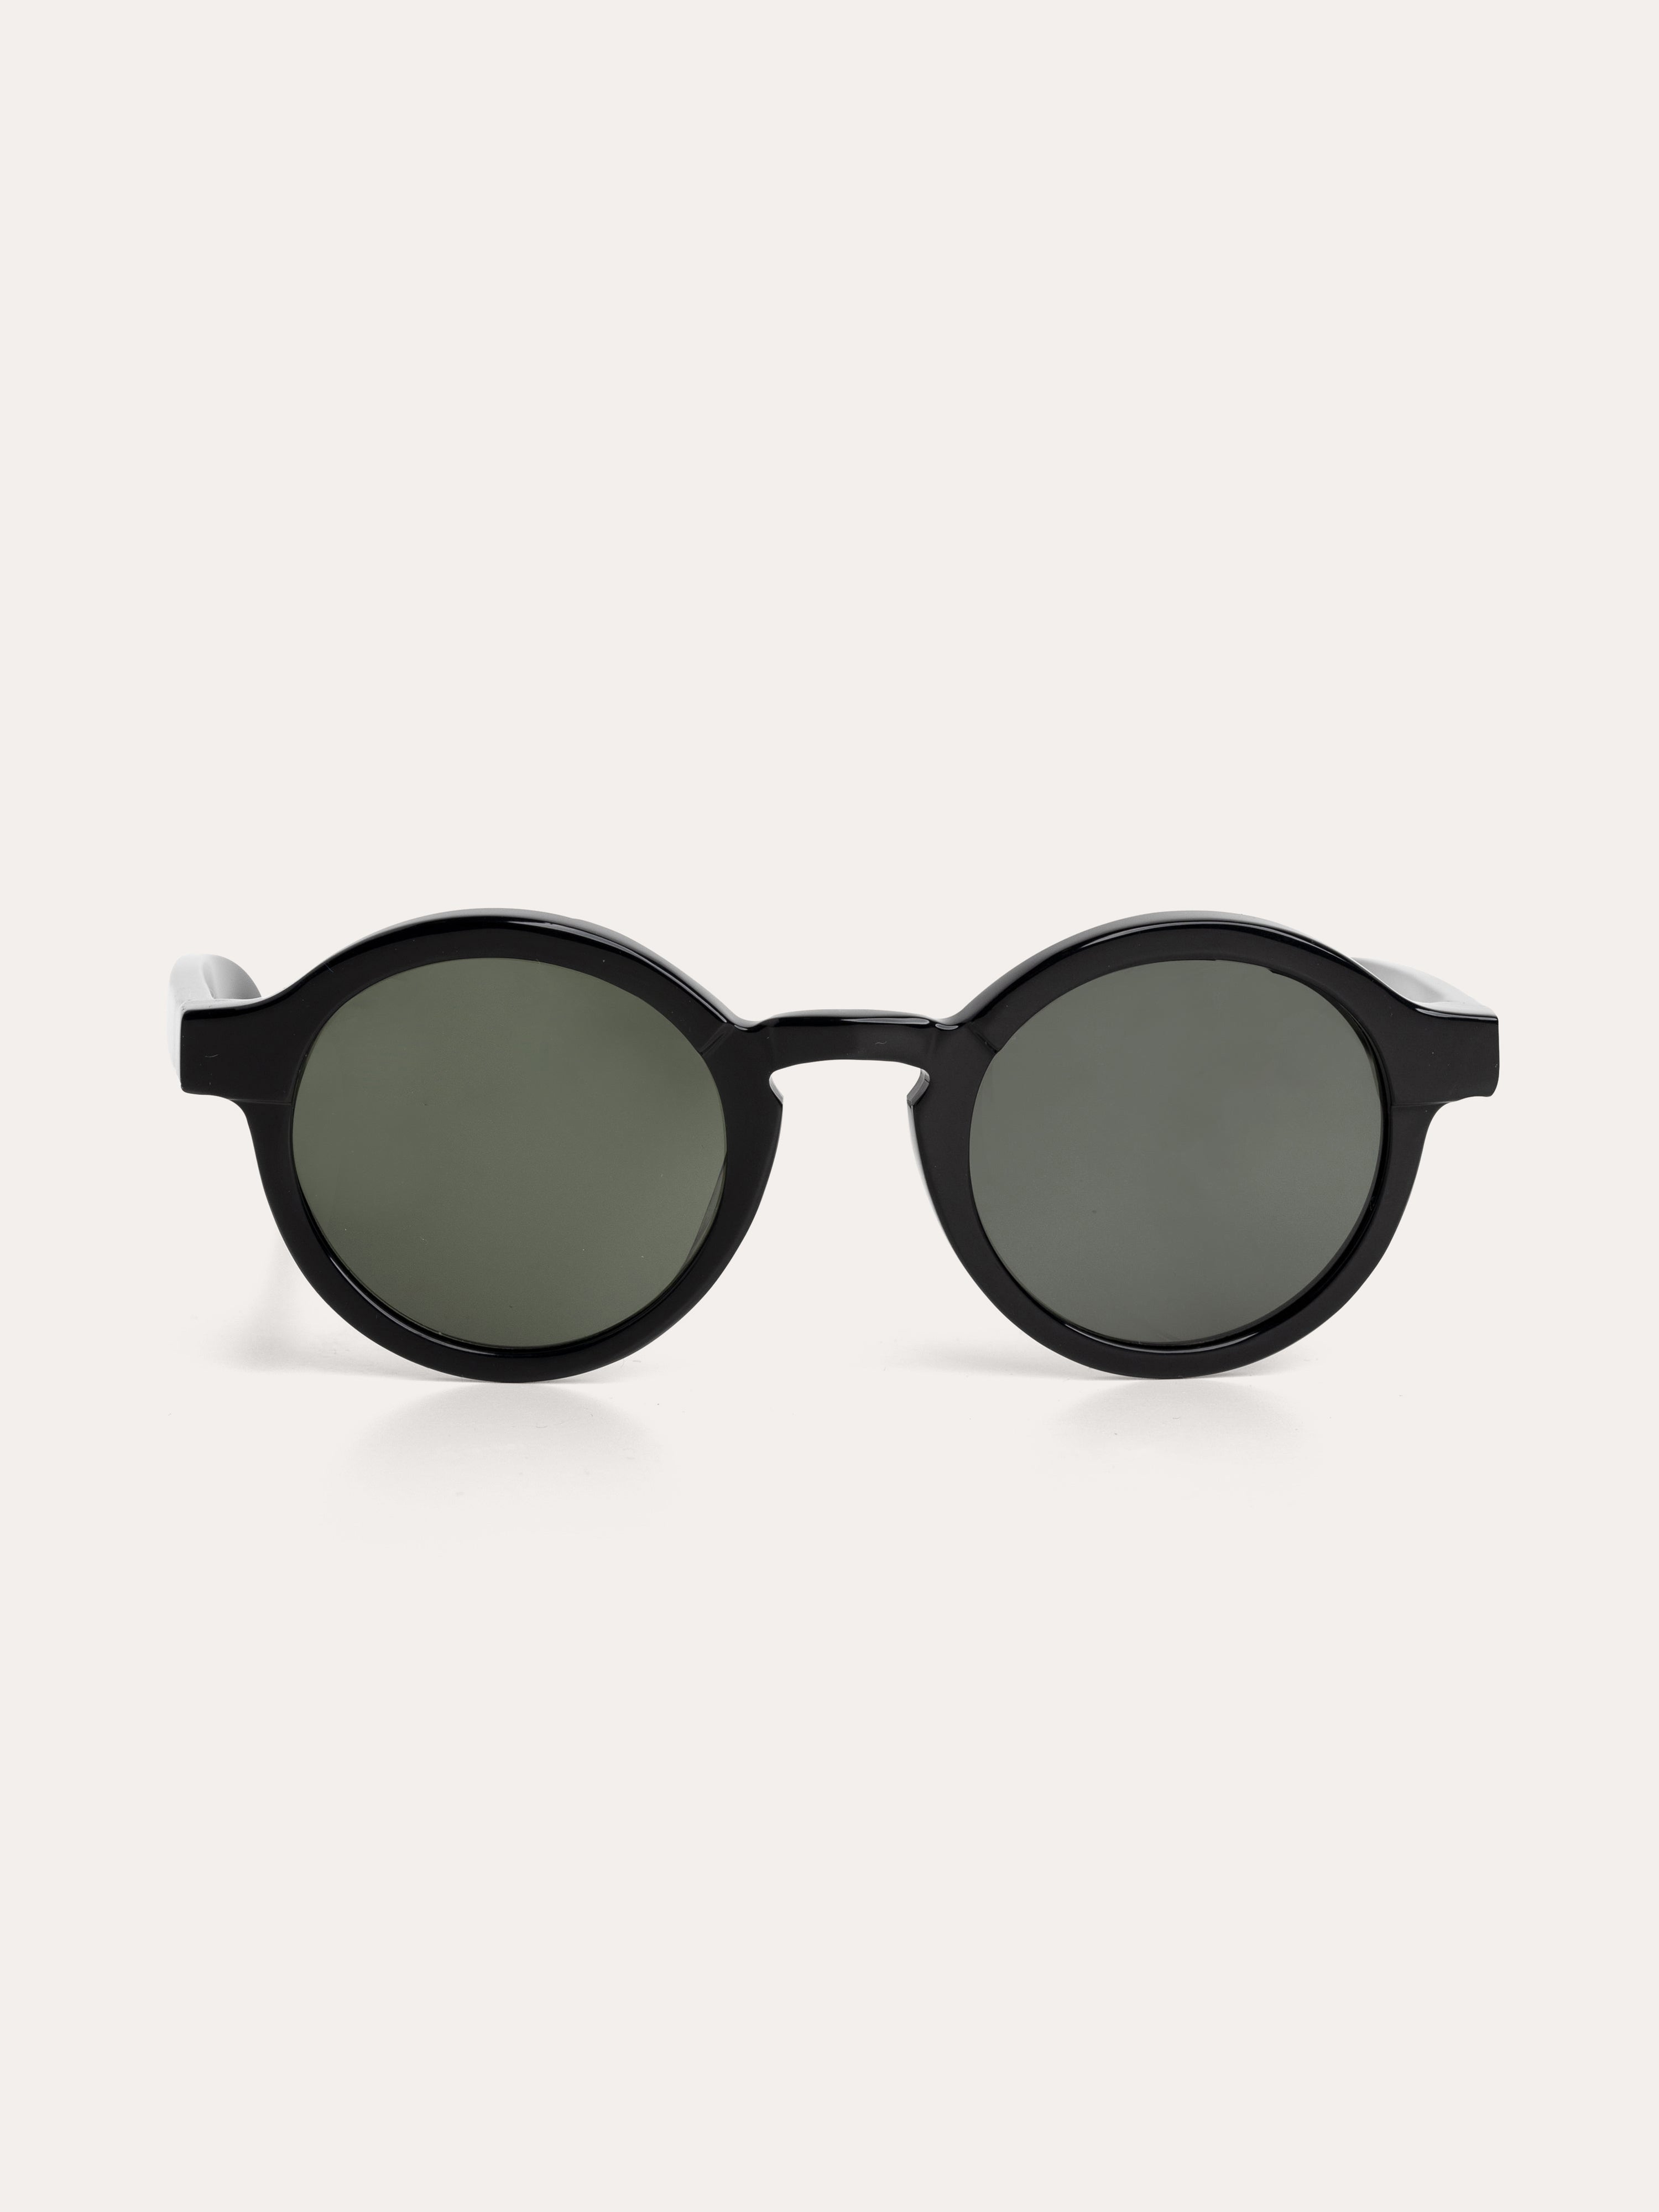 Berlin Black Sunglasses